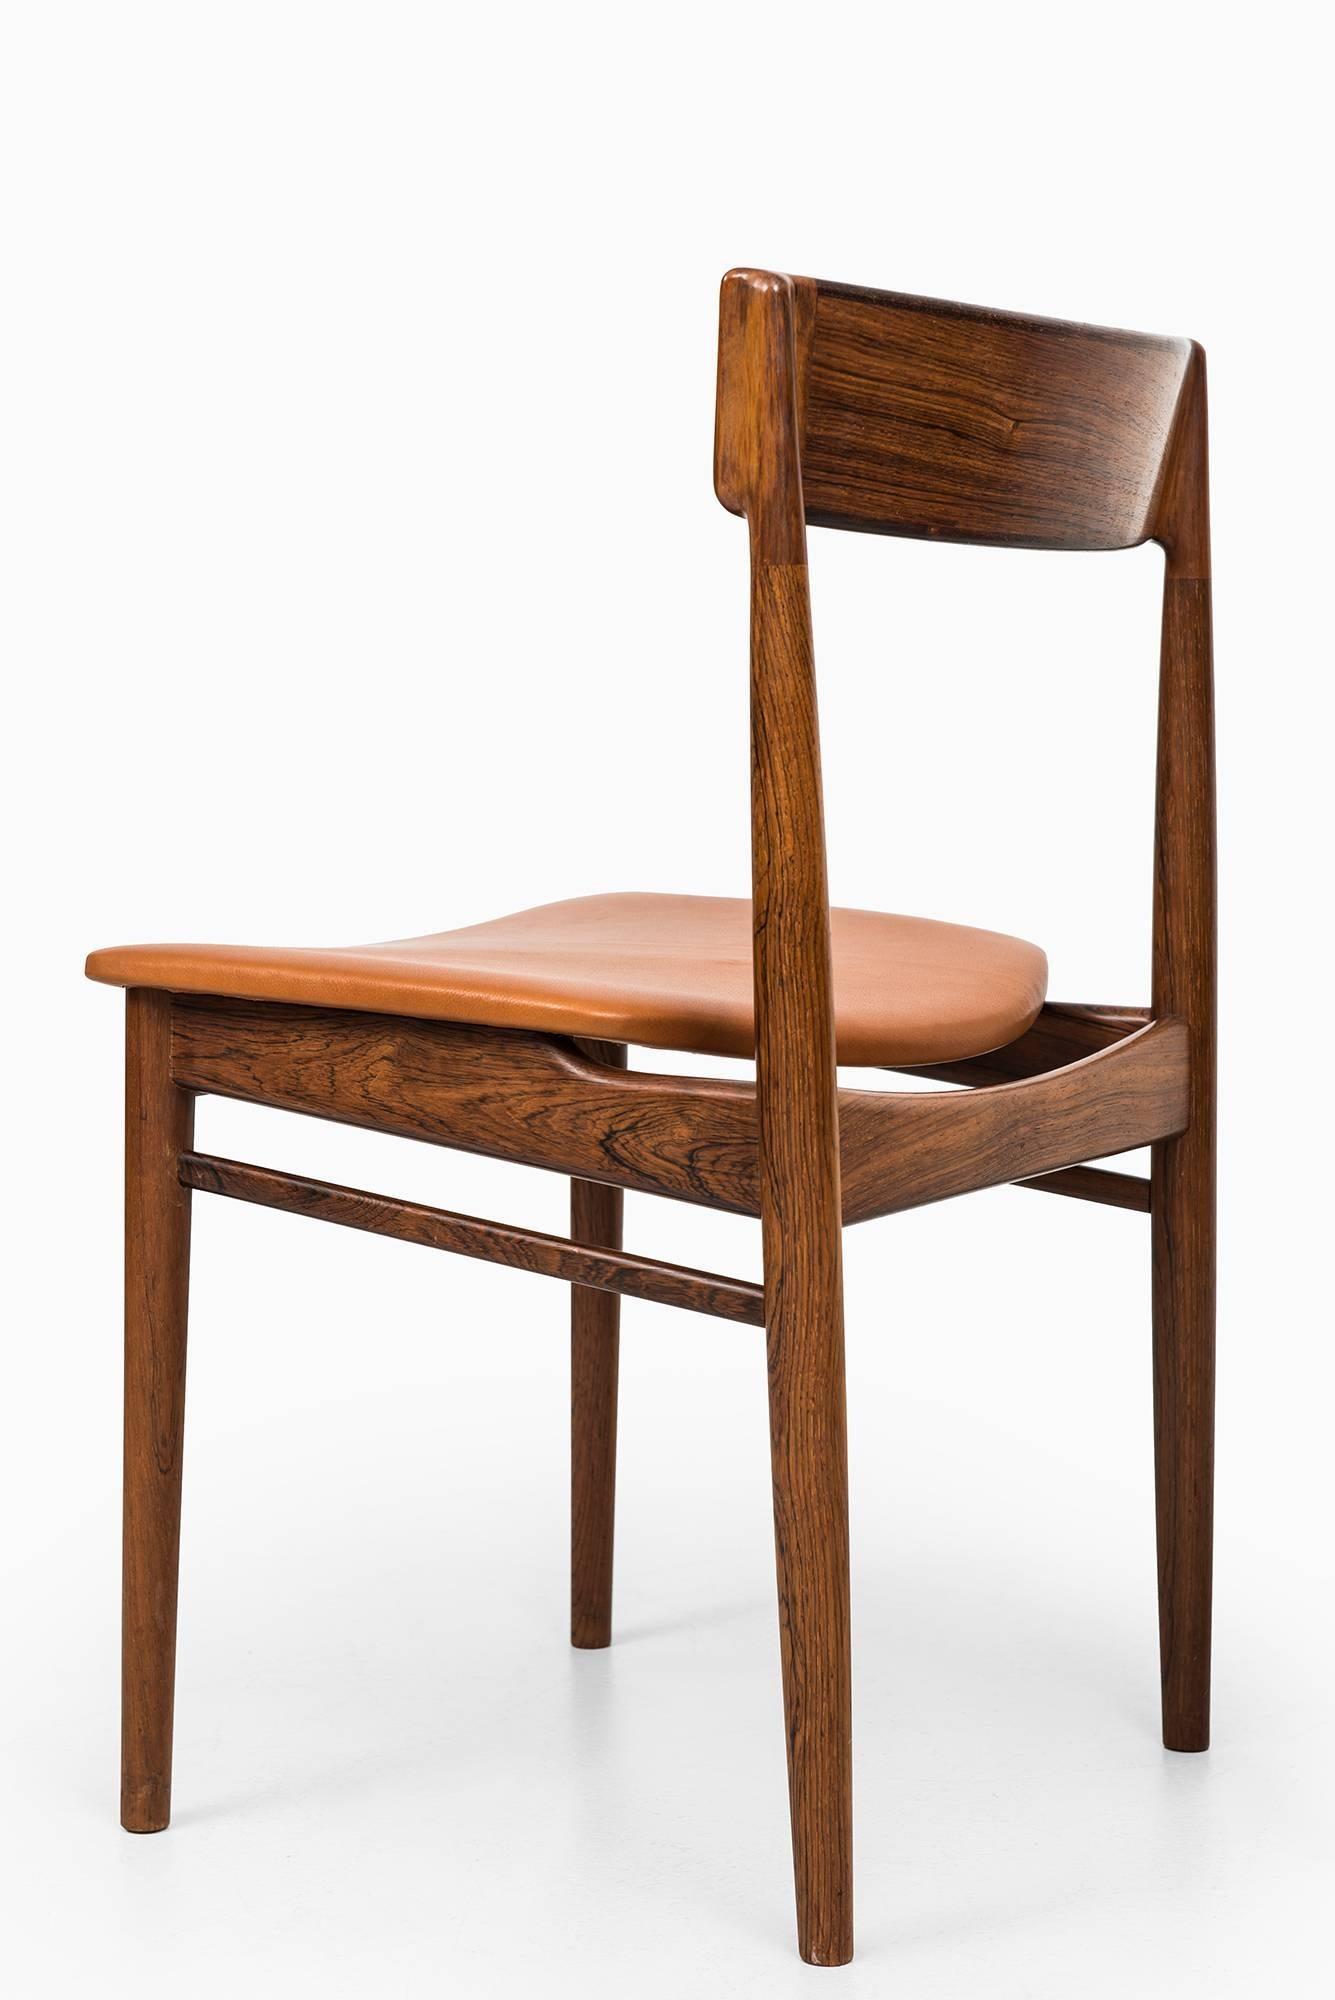 Mid-20th Century Henry Rosengren Hansen Dining Chairs Model 39 by Brande Møbelfabrik in Denmark